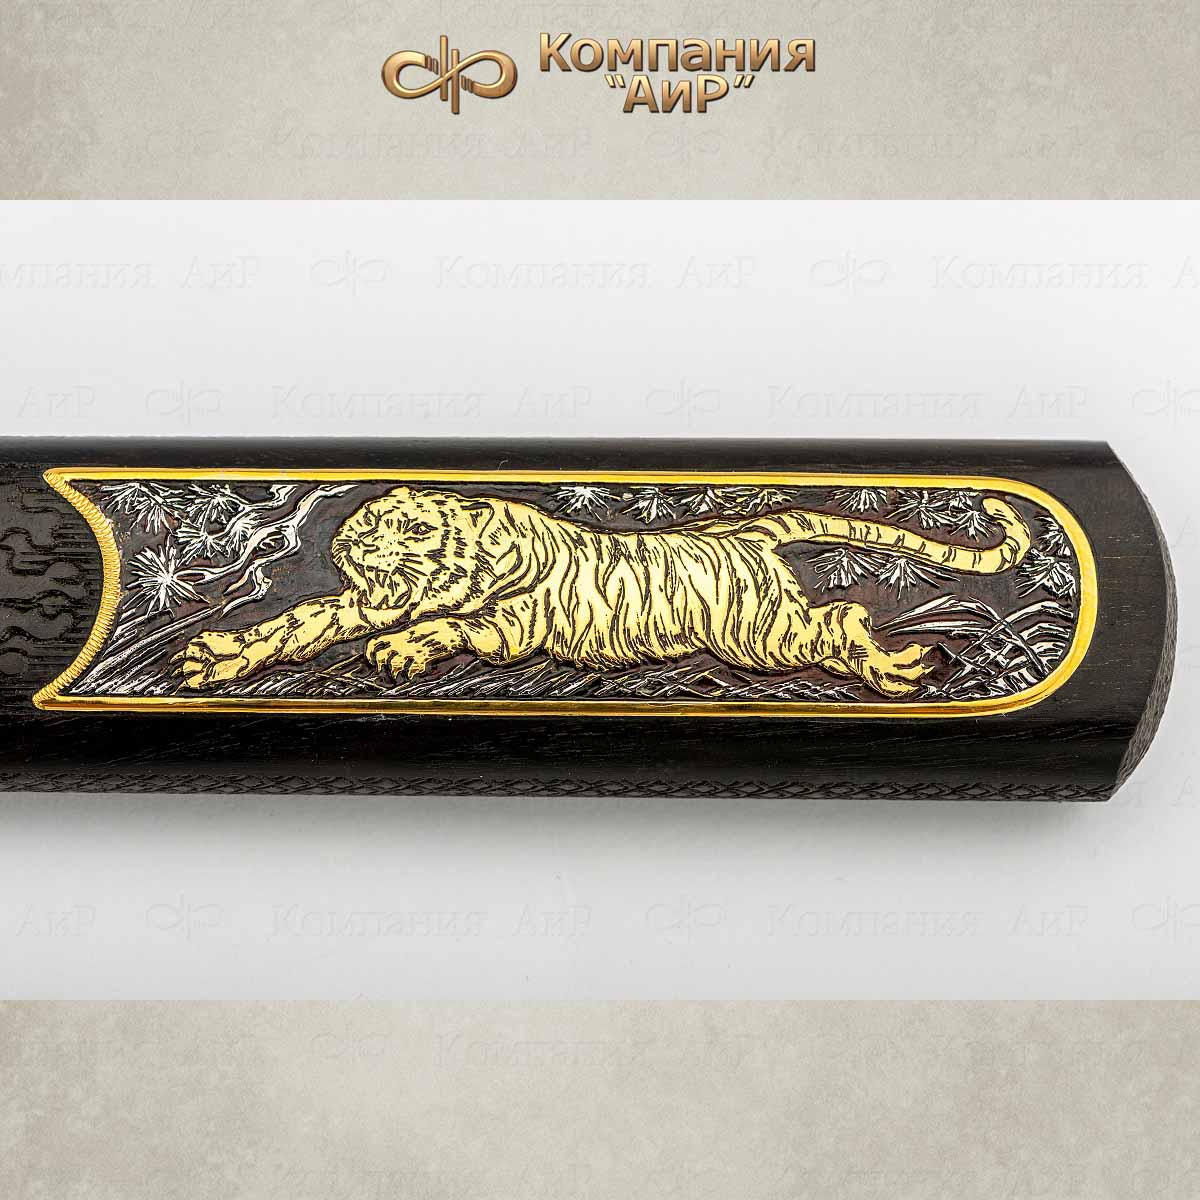 Когатана Крадущийся тигр, затаившийся дракон, Артикул: 35945 - Компания «АиР»